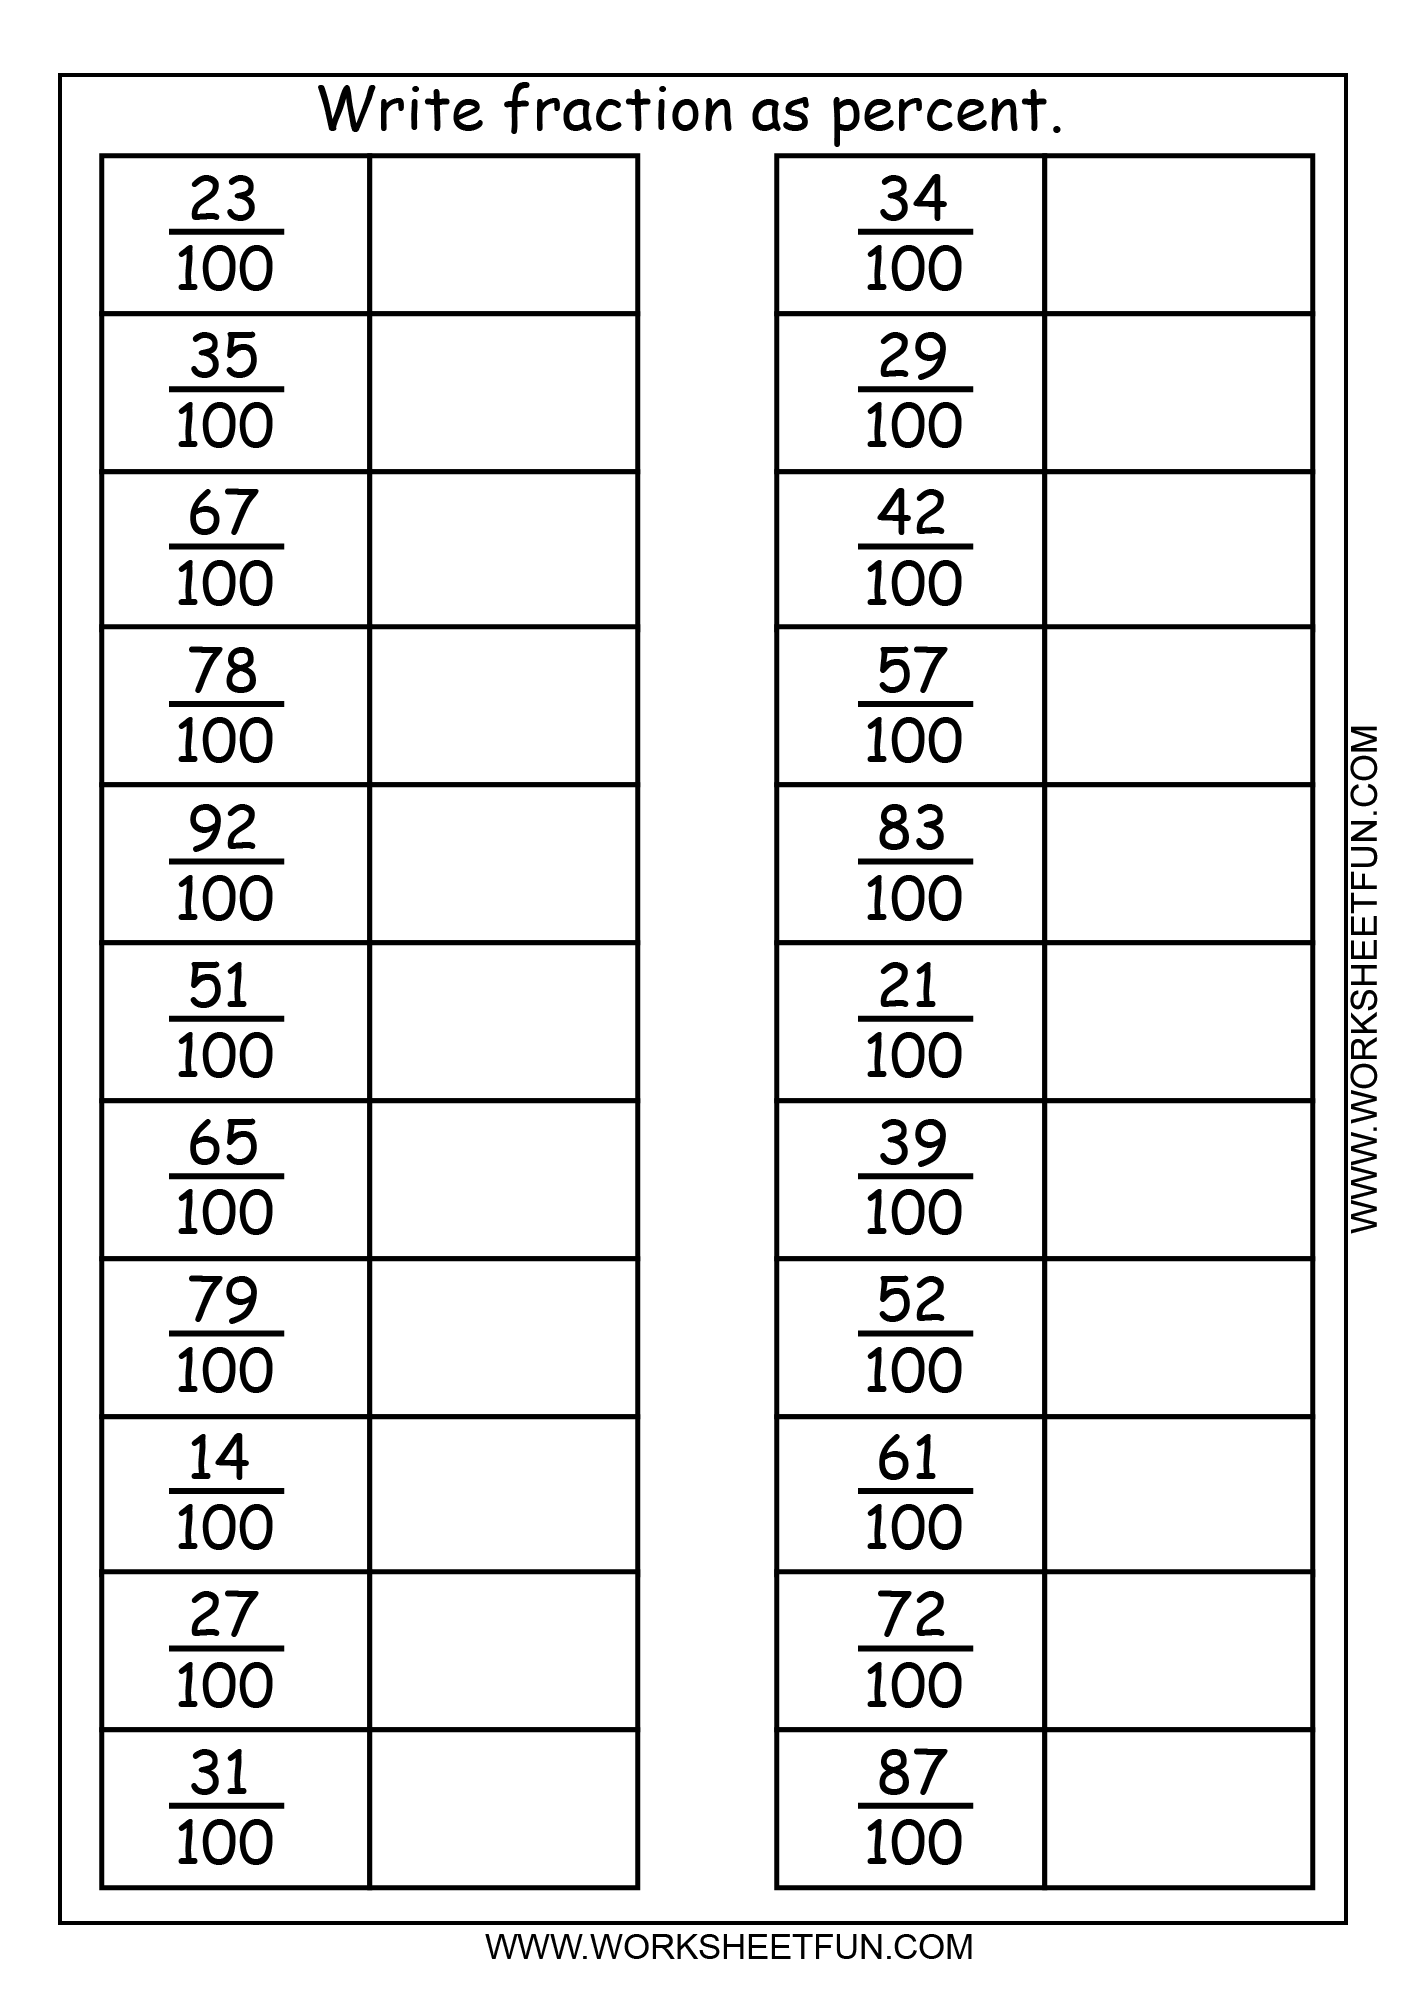 write fraction as percent 3 worksheets free printable worksheets